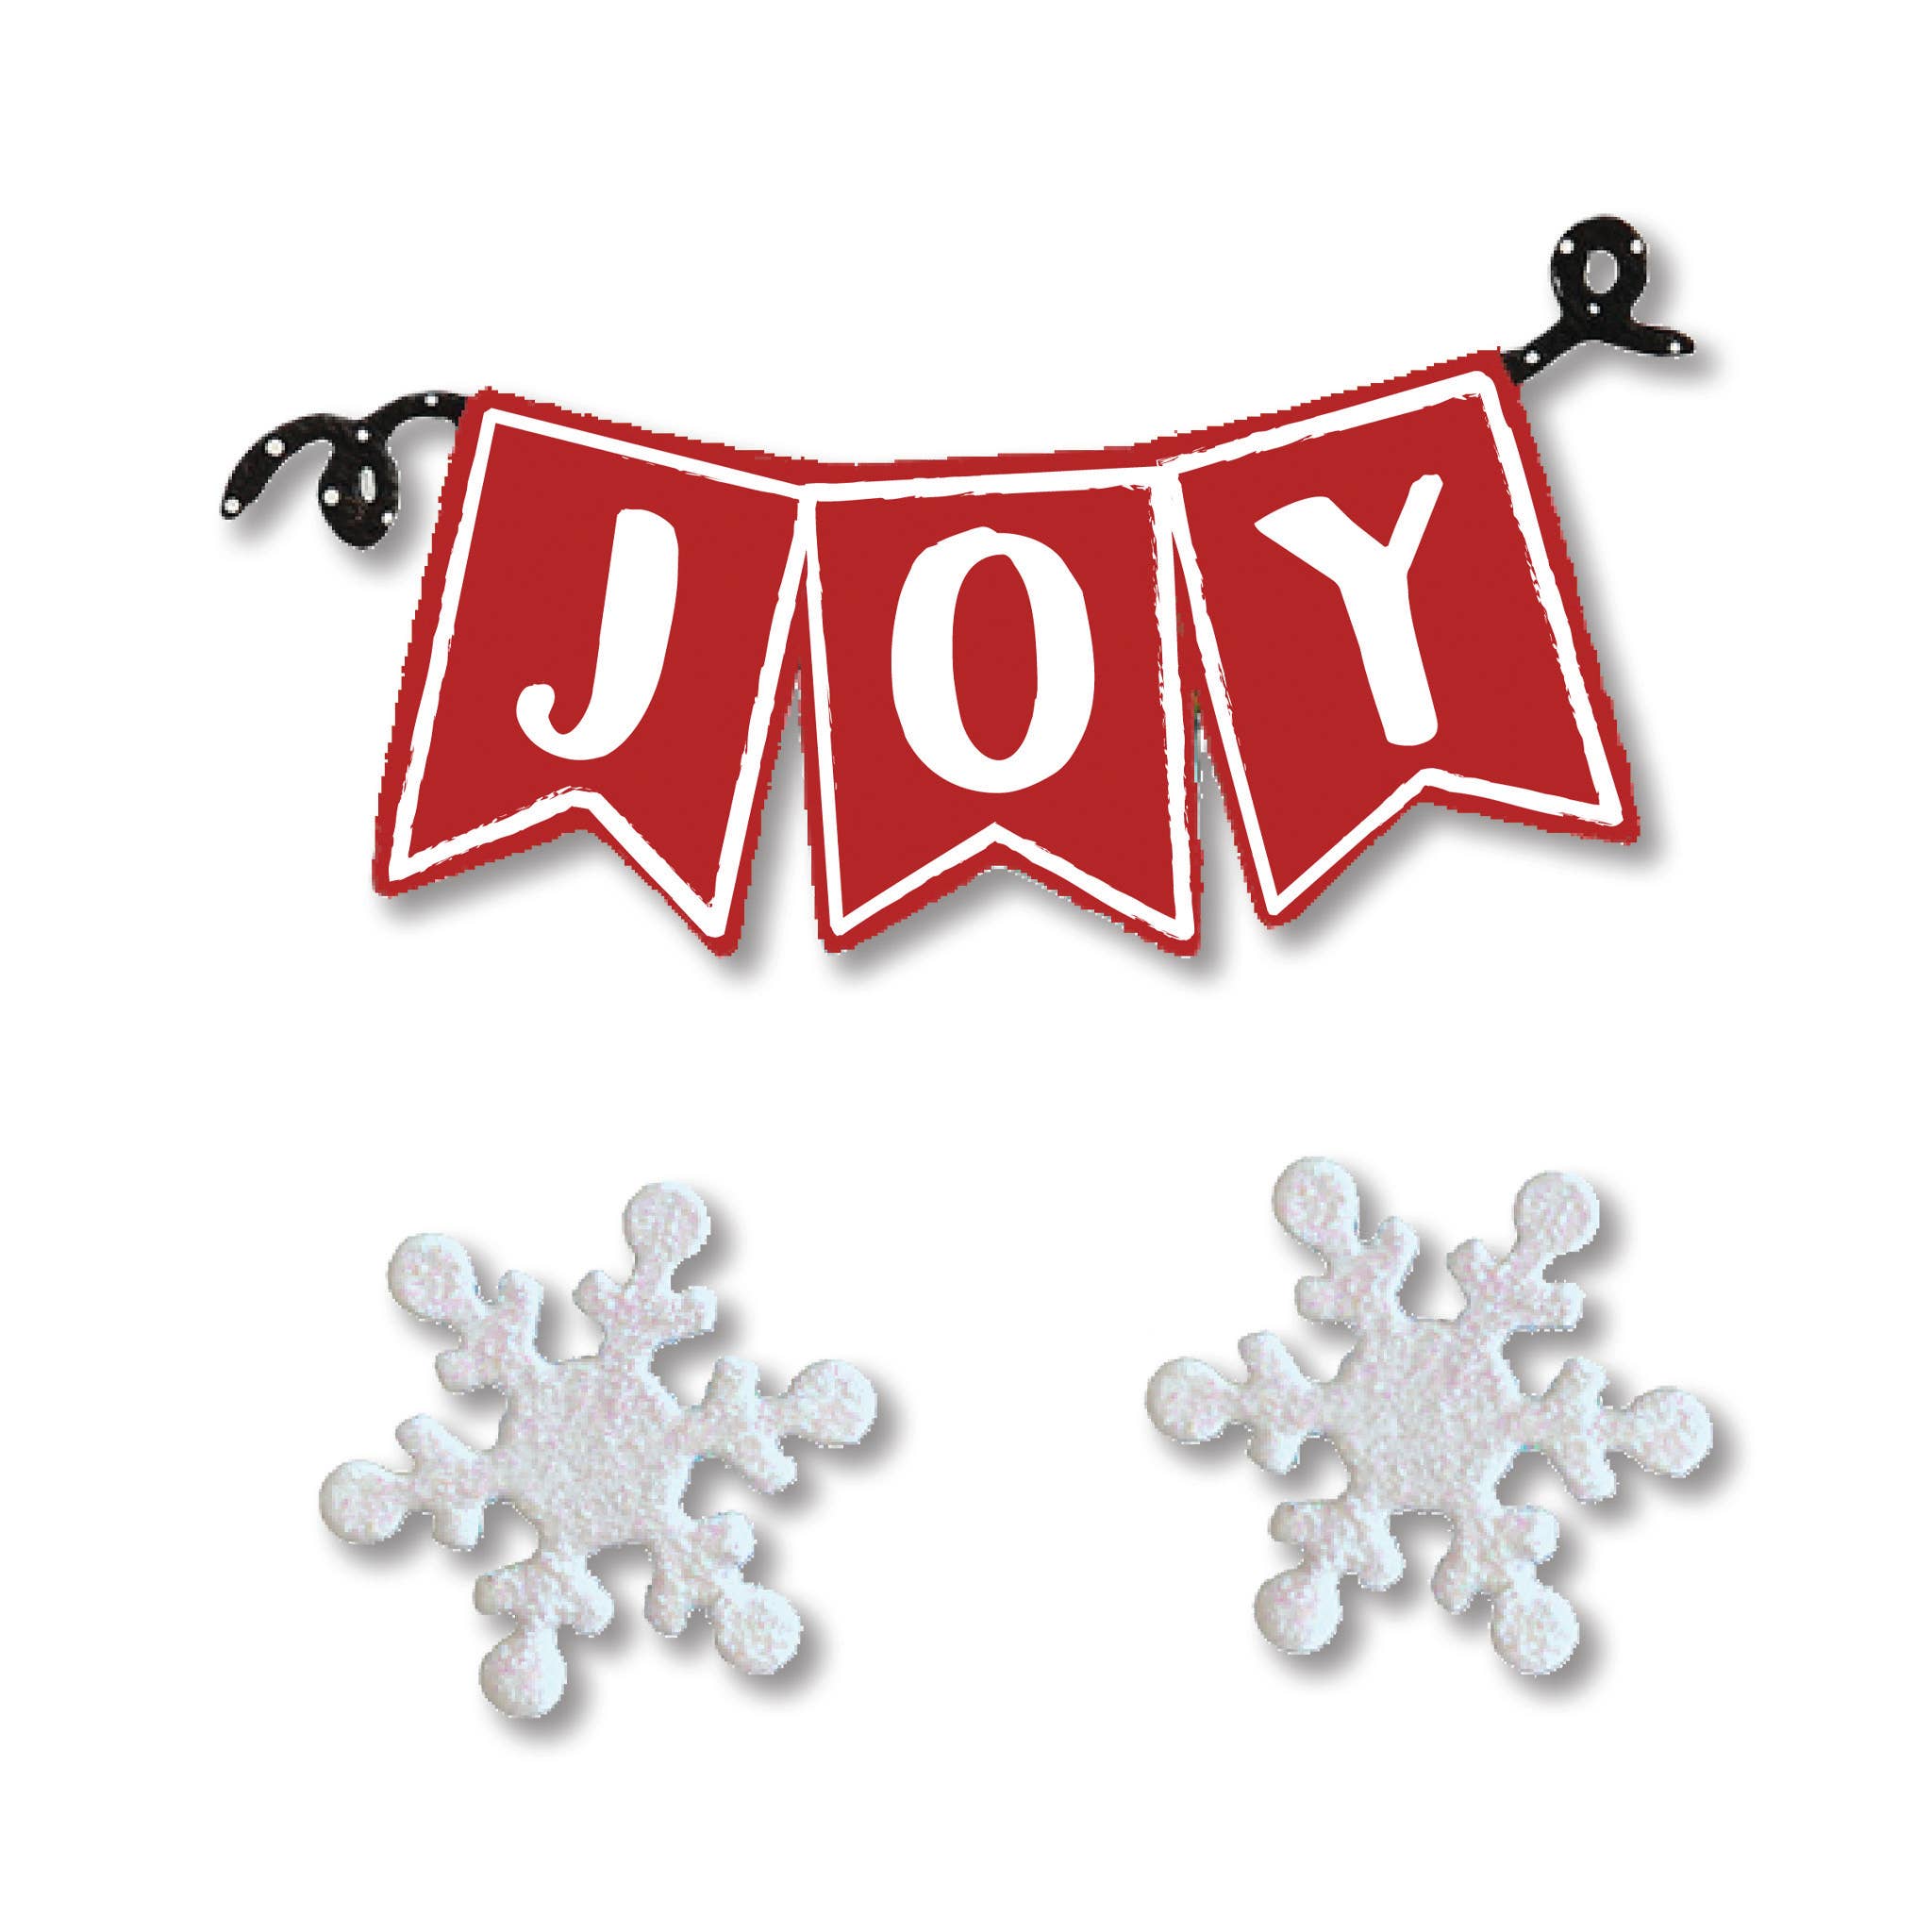 Joy Banner w/ Snowflake Magnets S/3